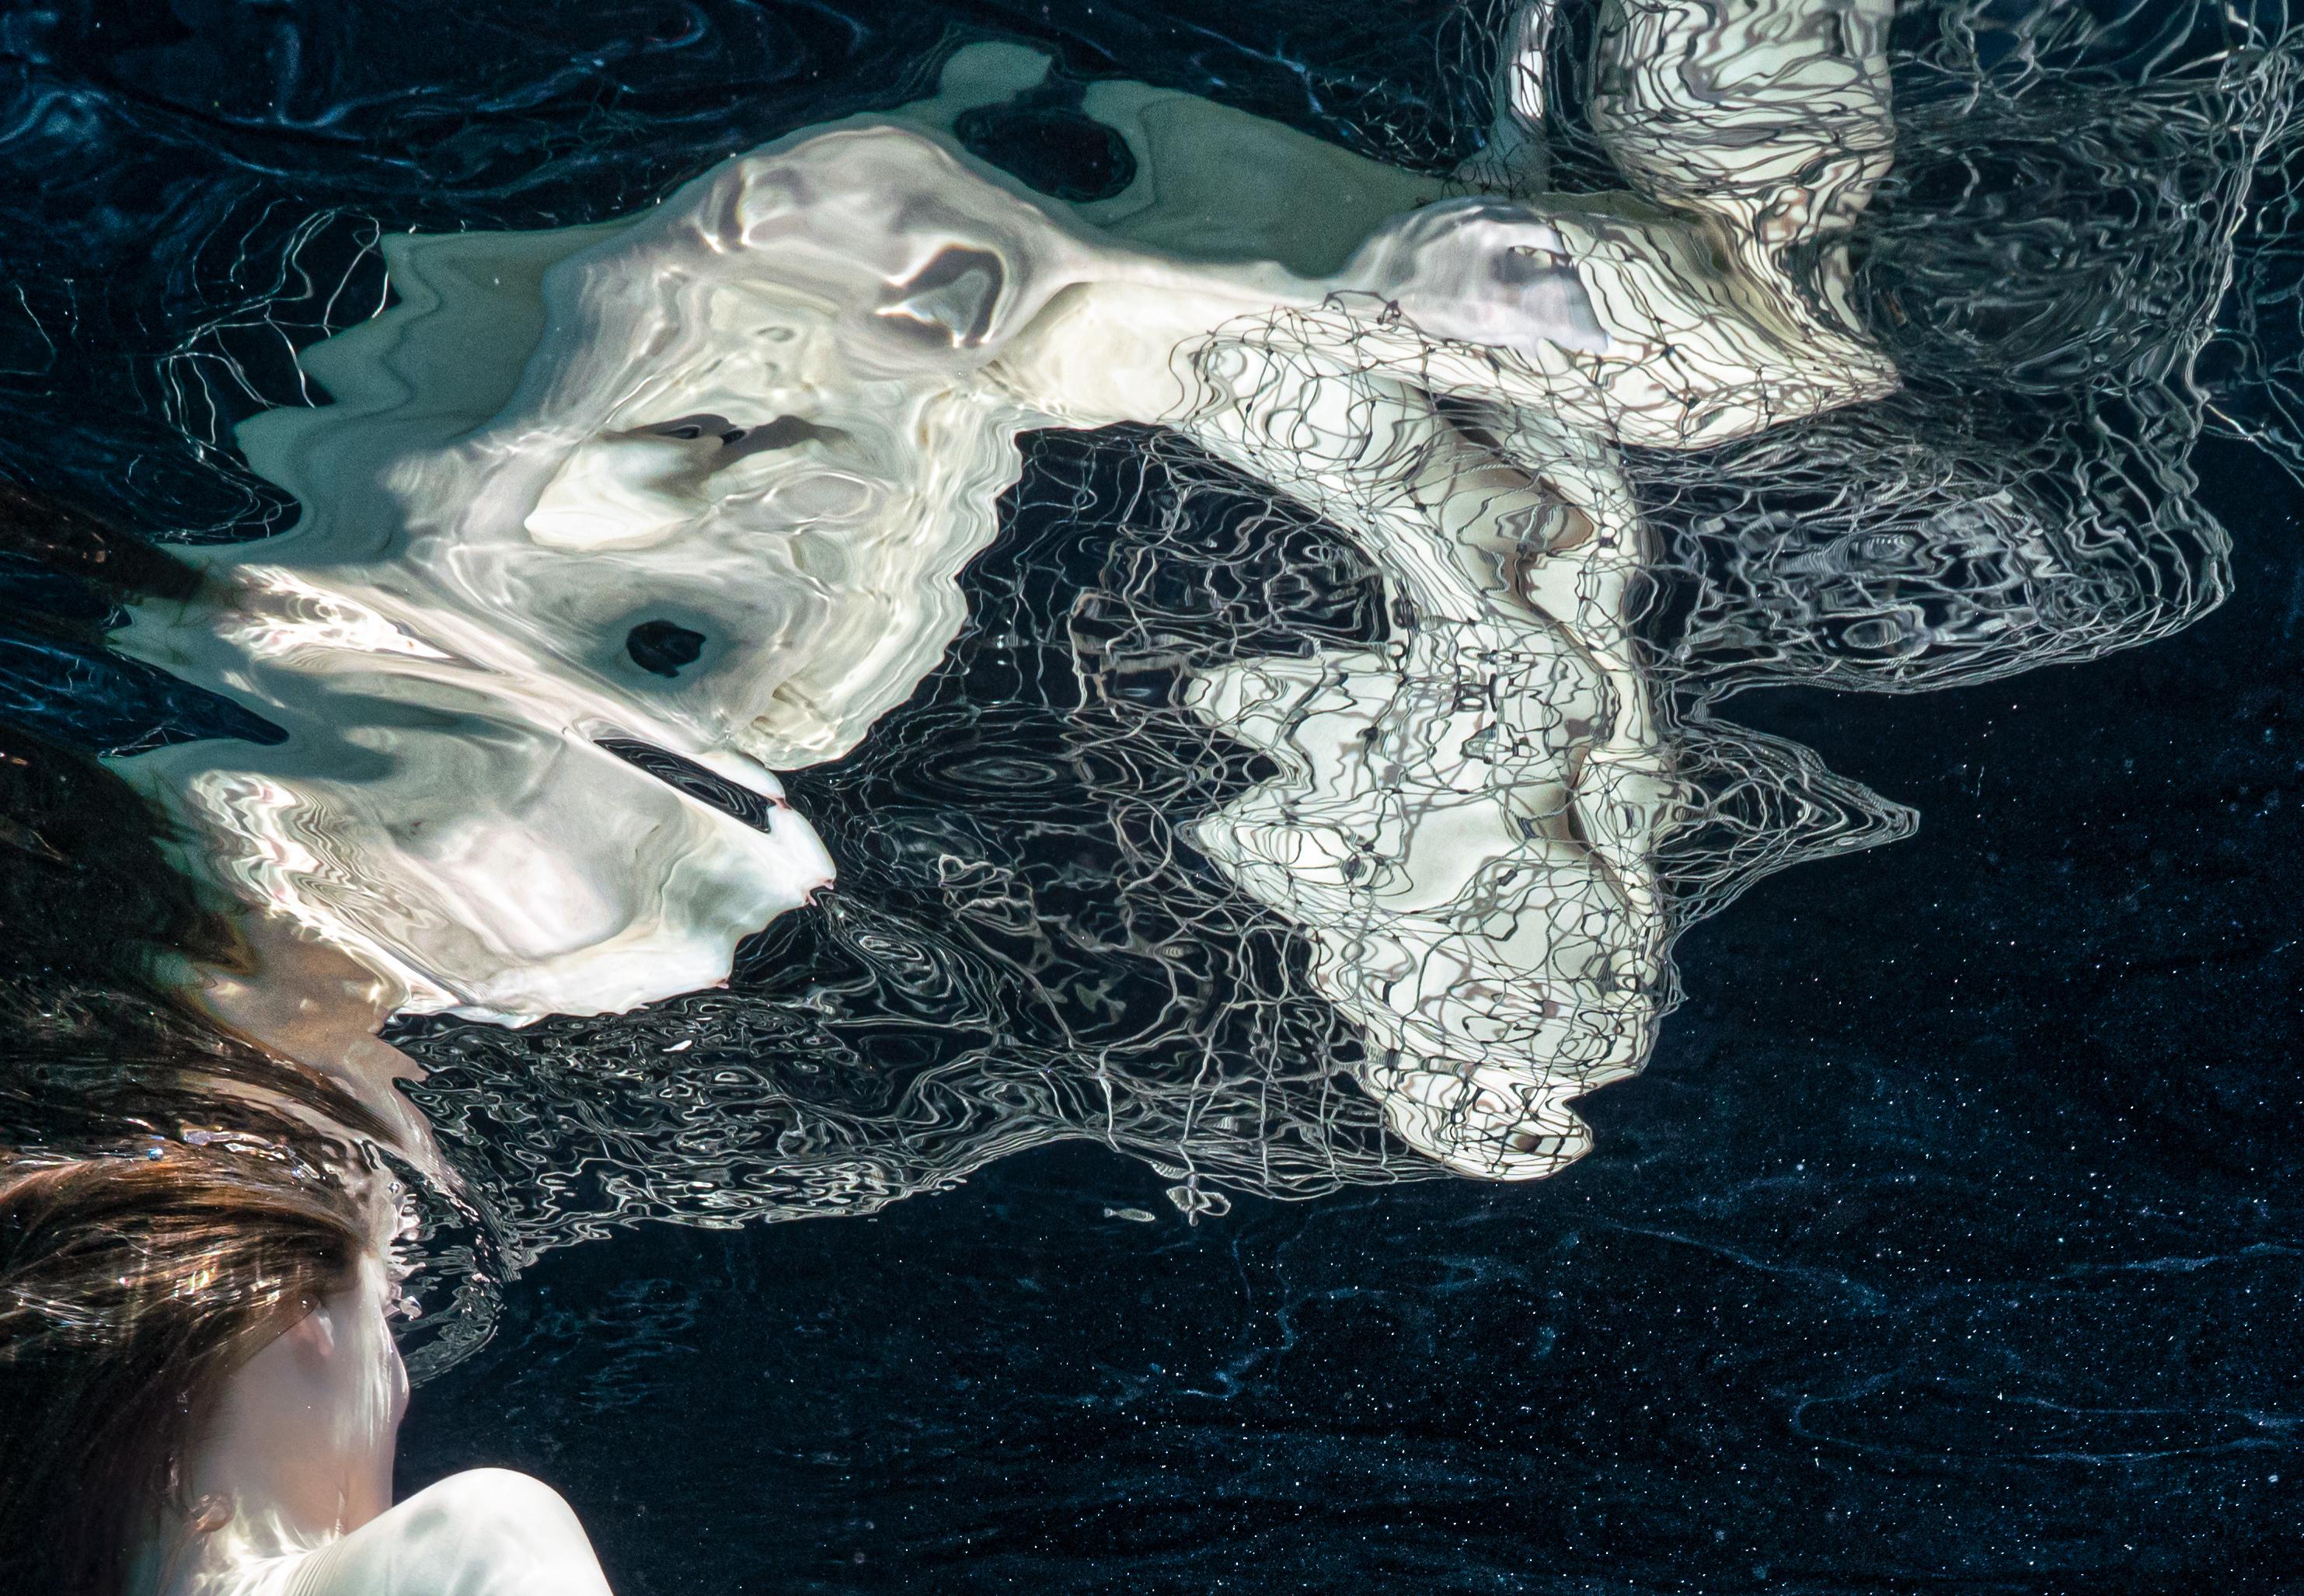 Constellation - underwater nude photograph - archival pigment print 24x35